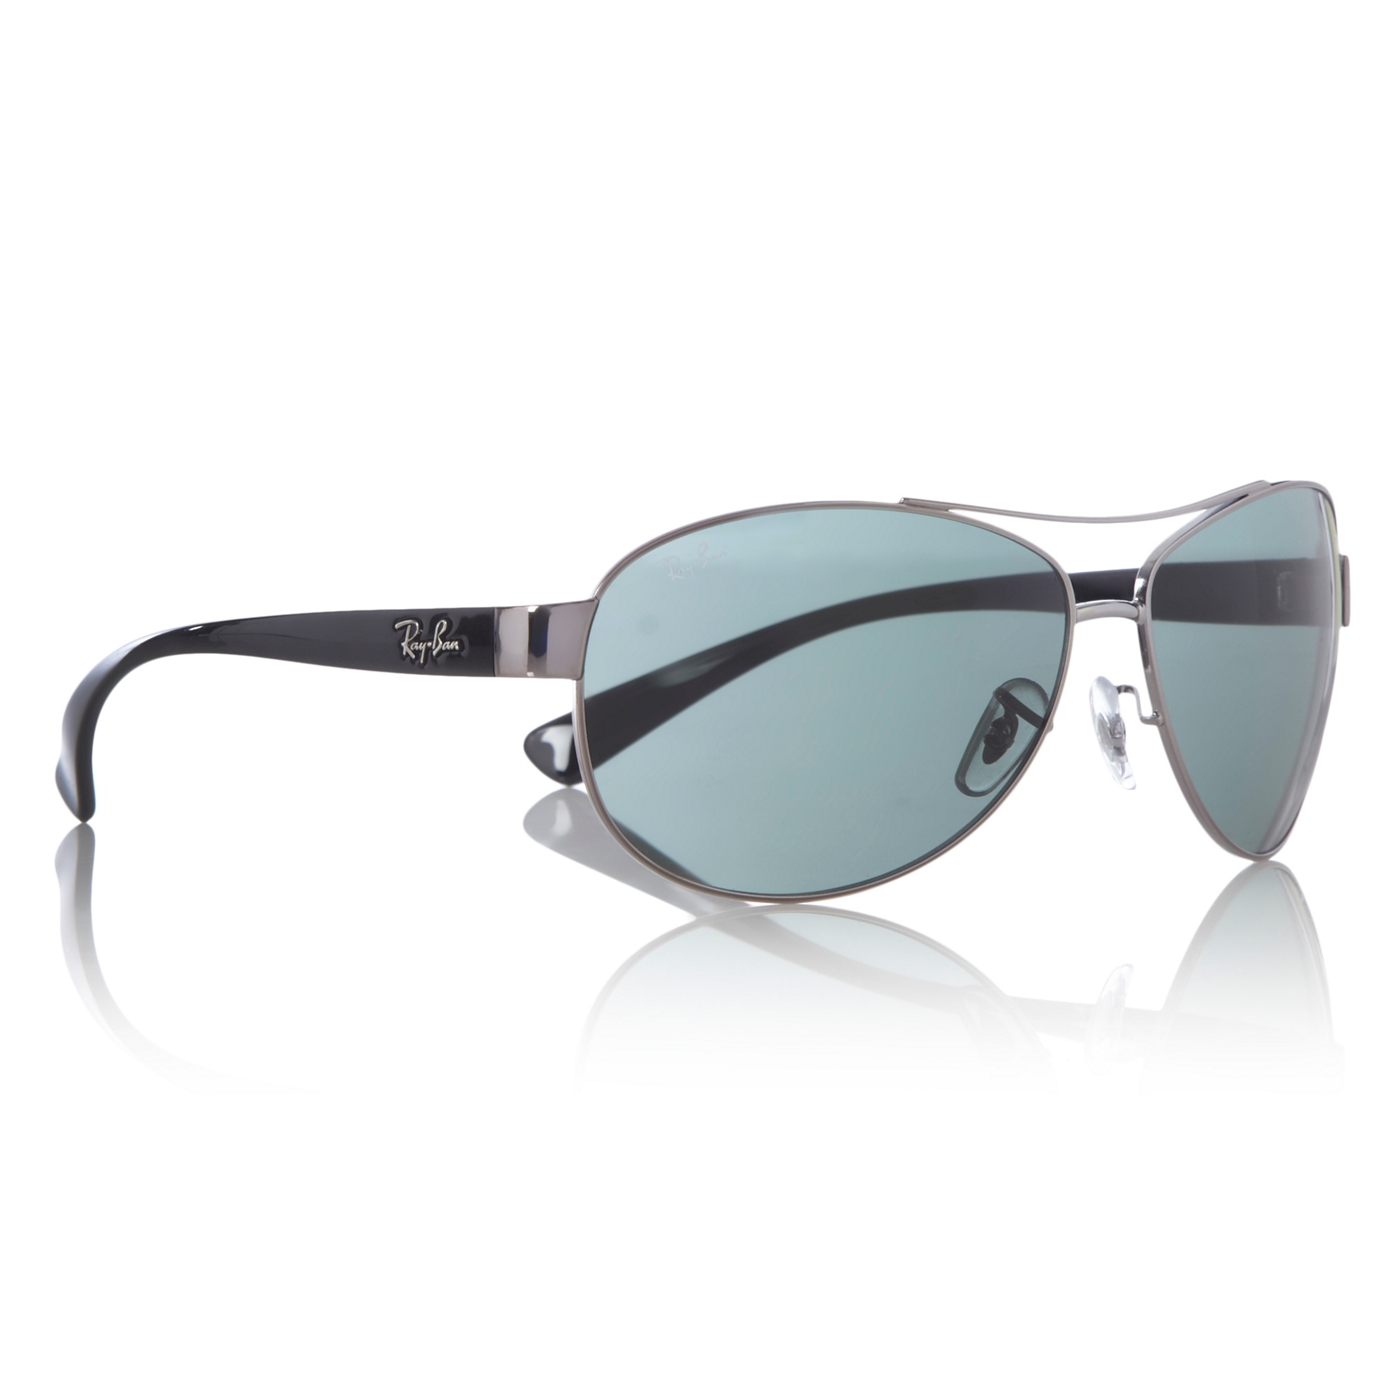 Ray Ban Green curved double bar aviator sunglasses